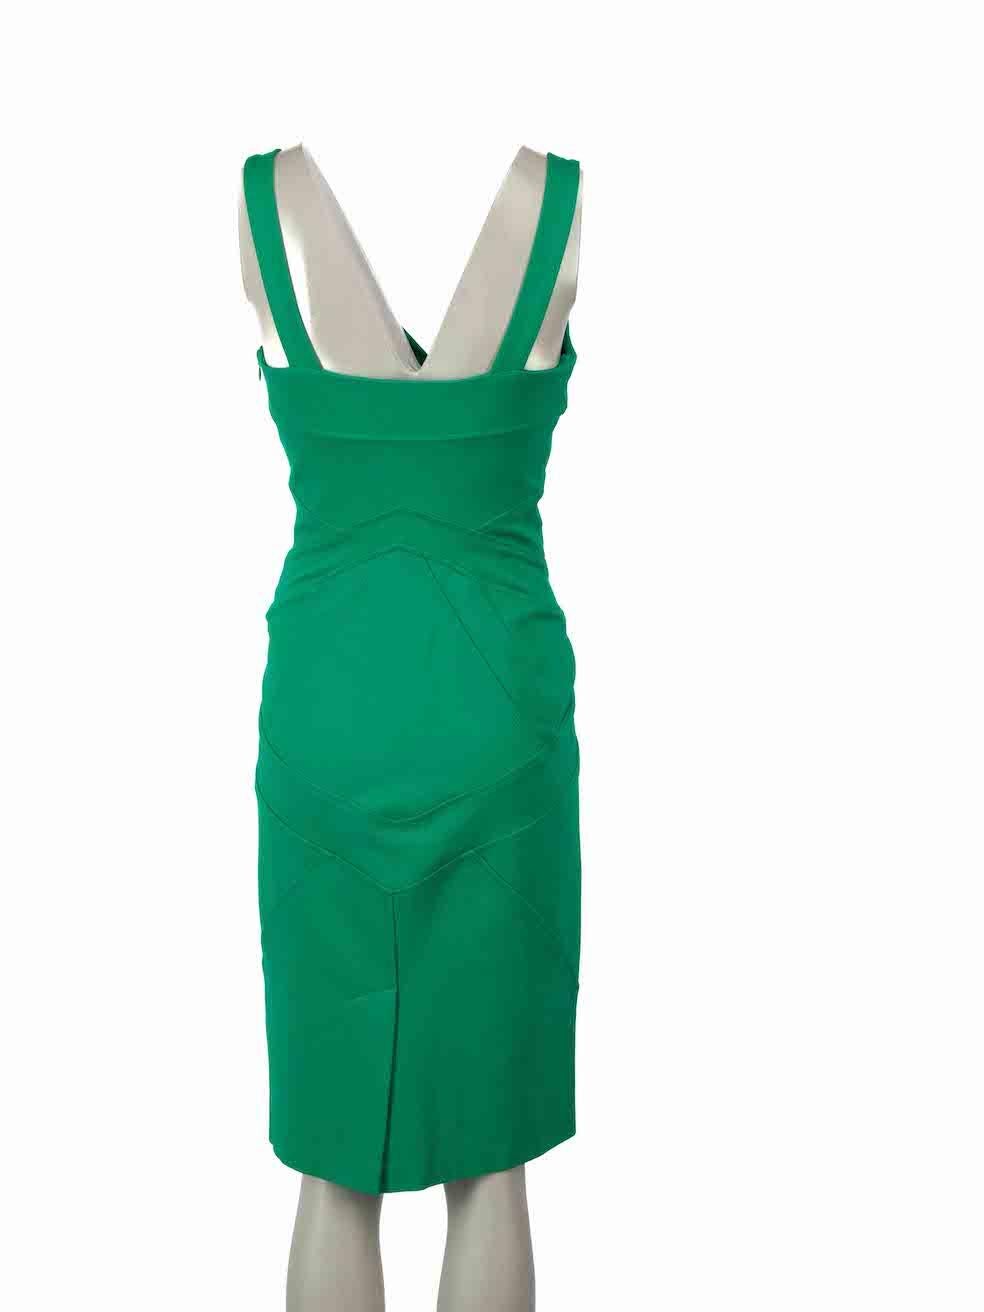 Diane Von Furstenberg Green Benny Bodycon Dress Size S In Excellent Condition For Sale In London, GB